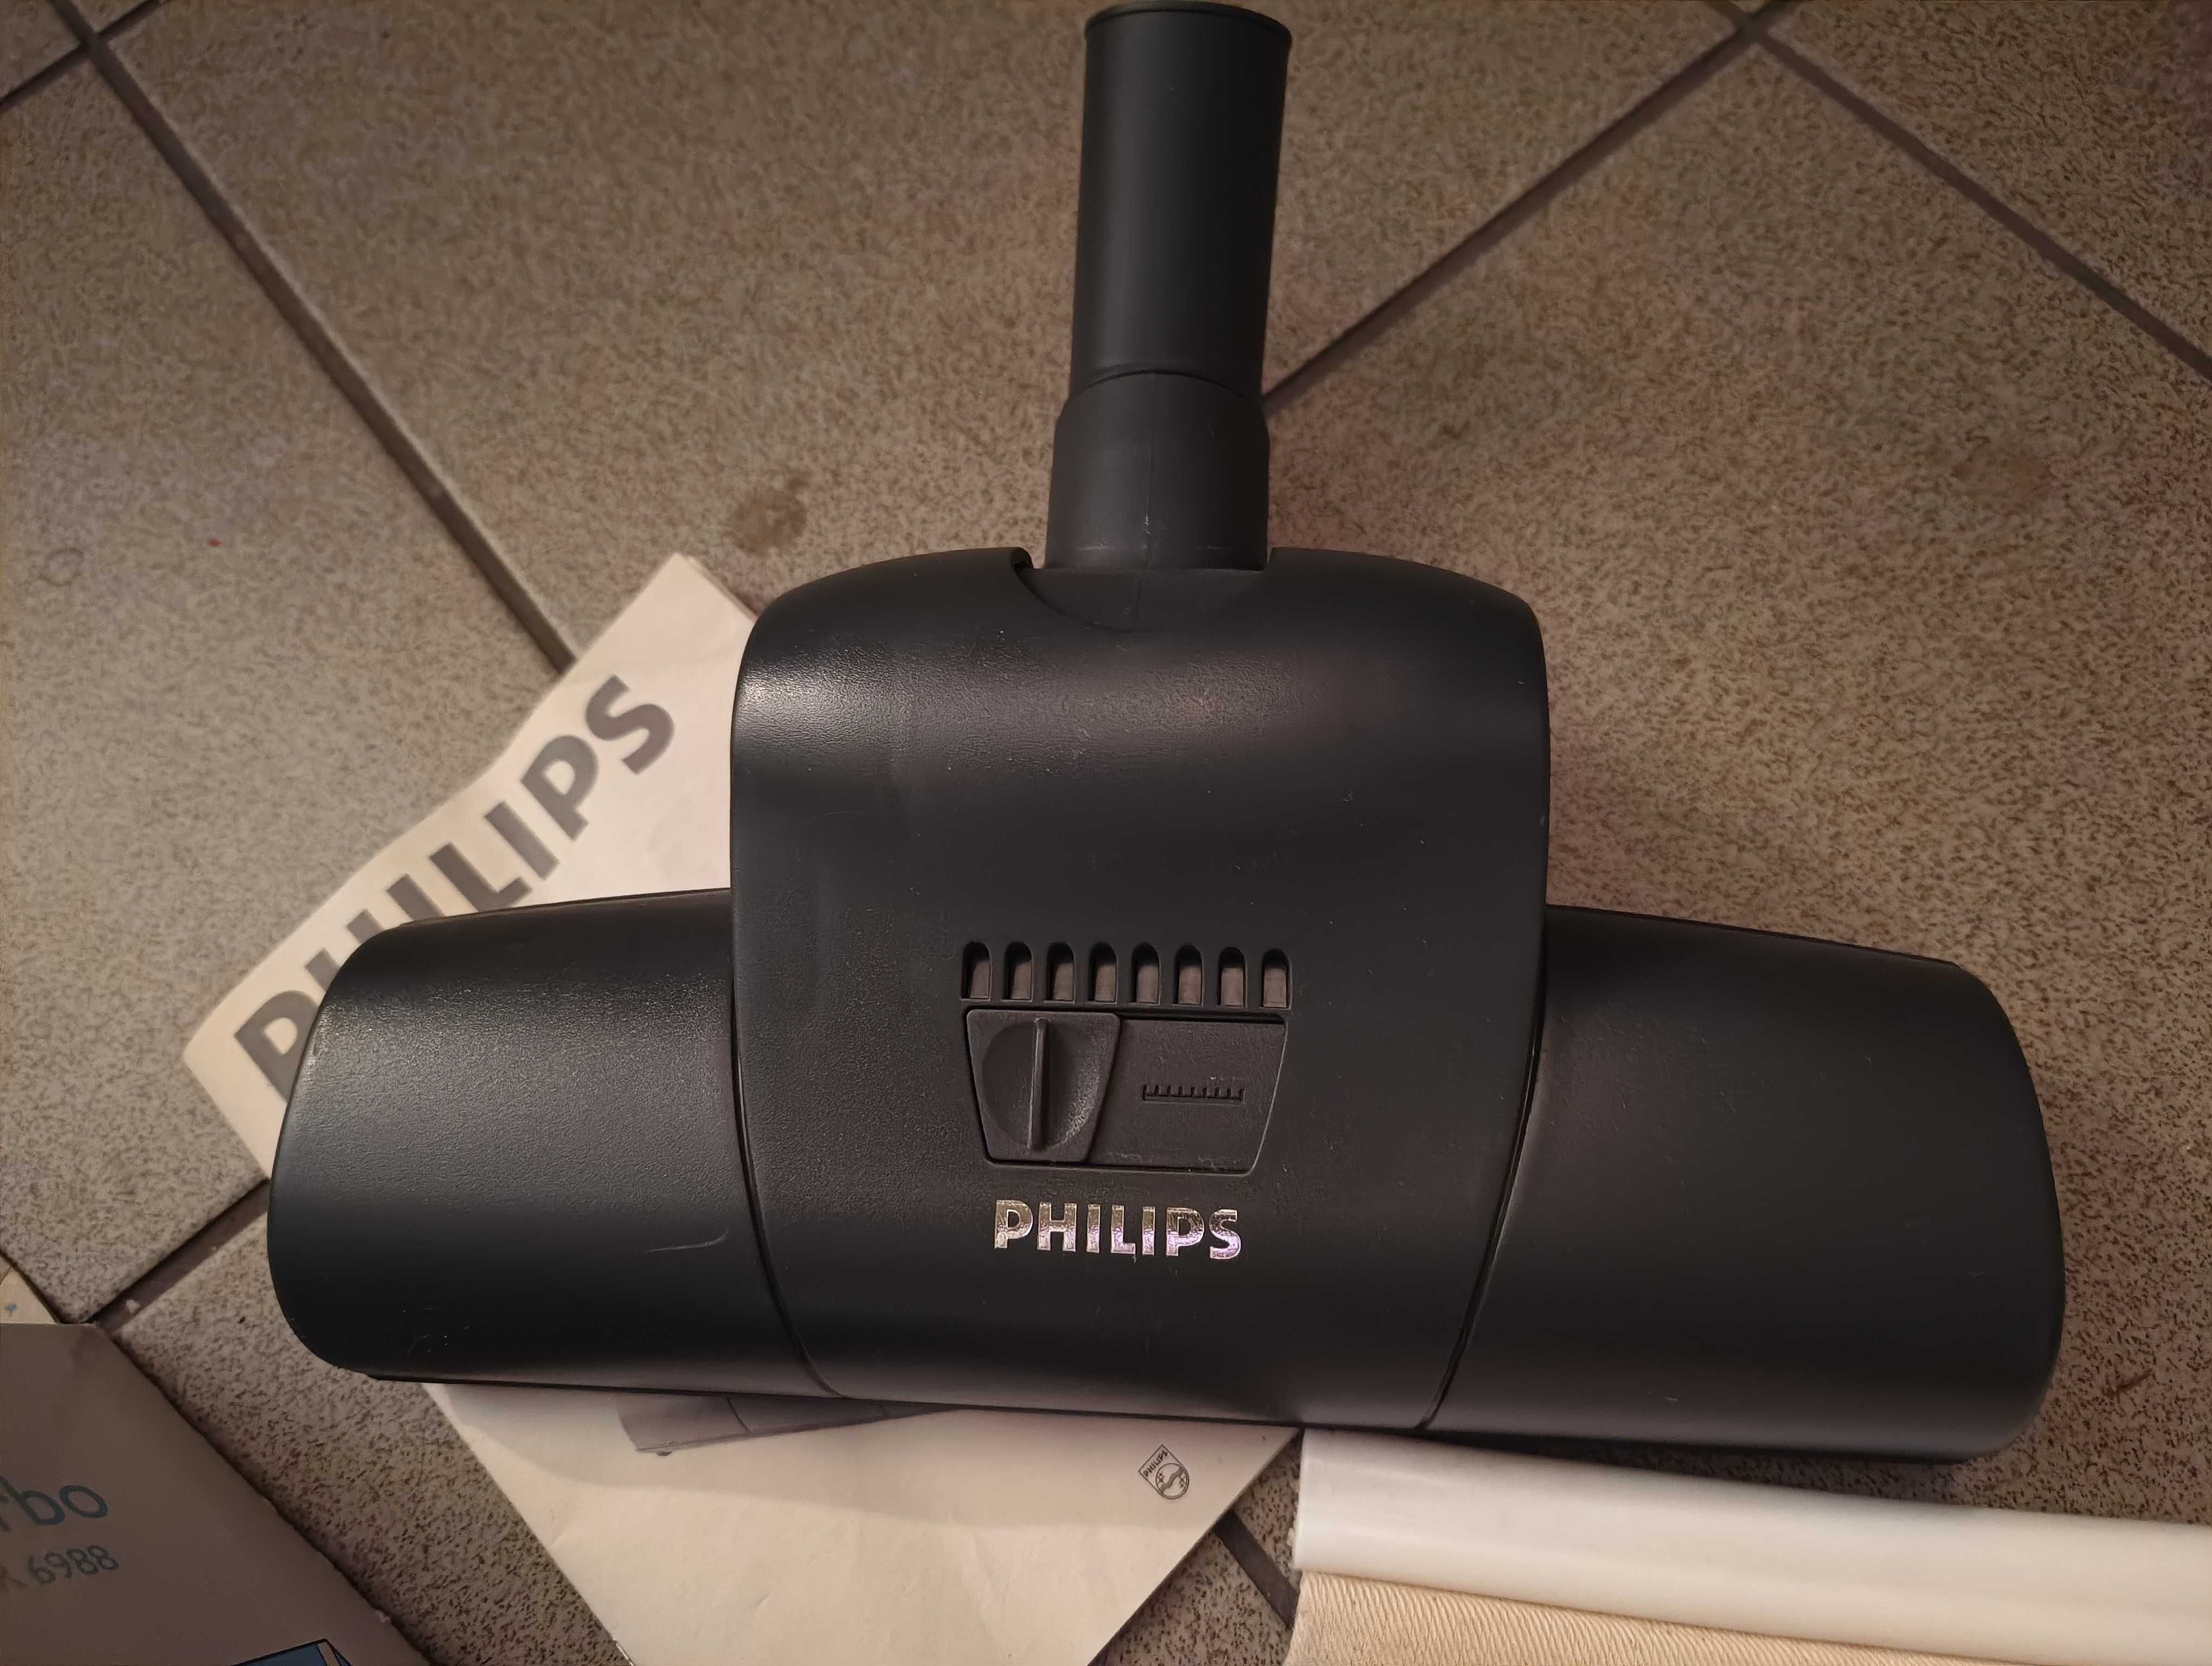 Turbo szczotka Philips HR 6988 + worek